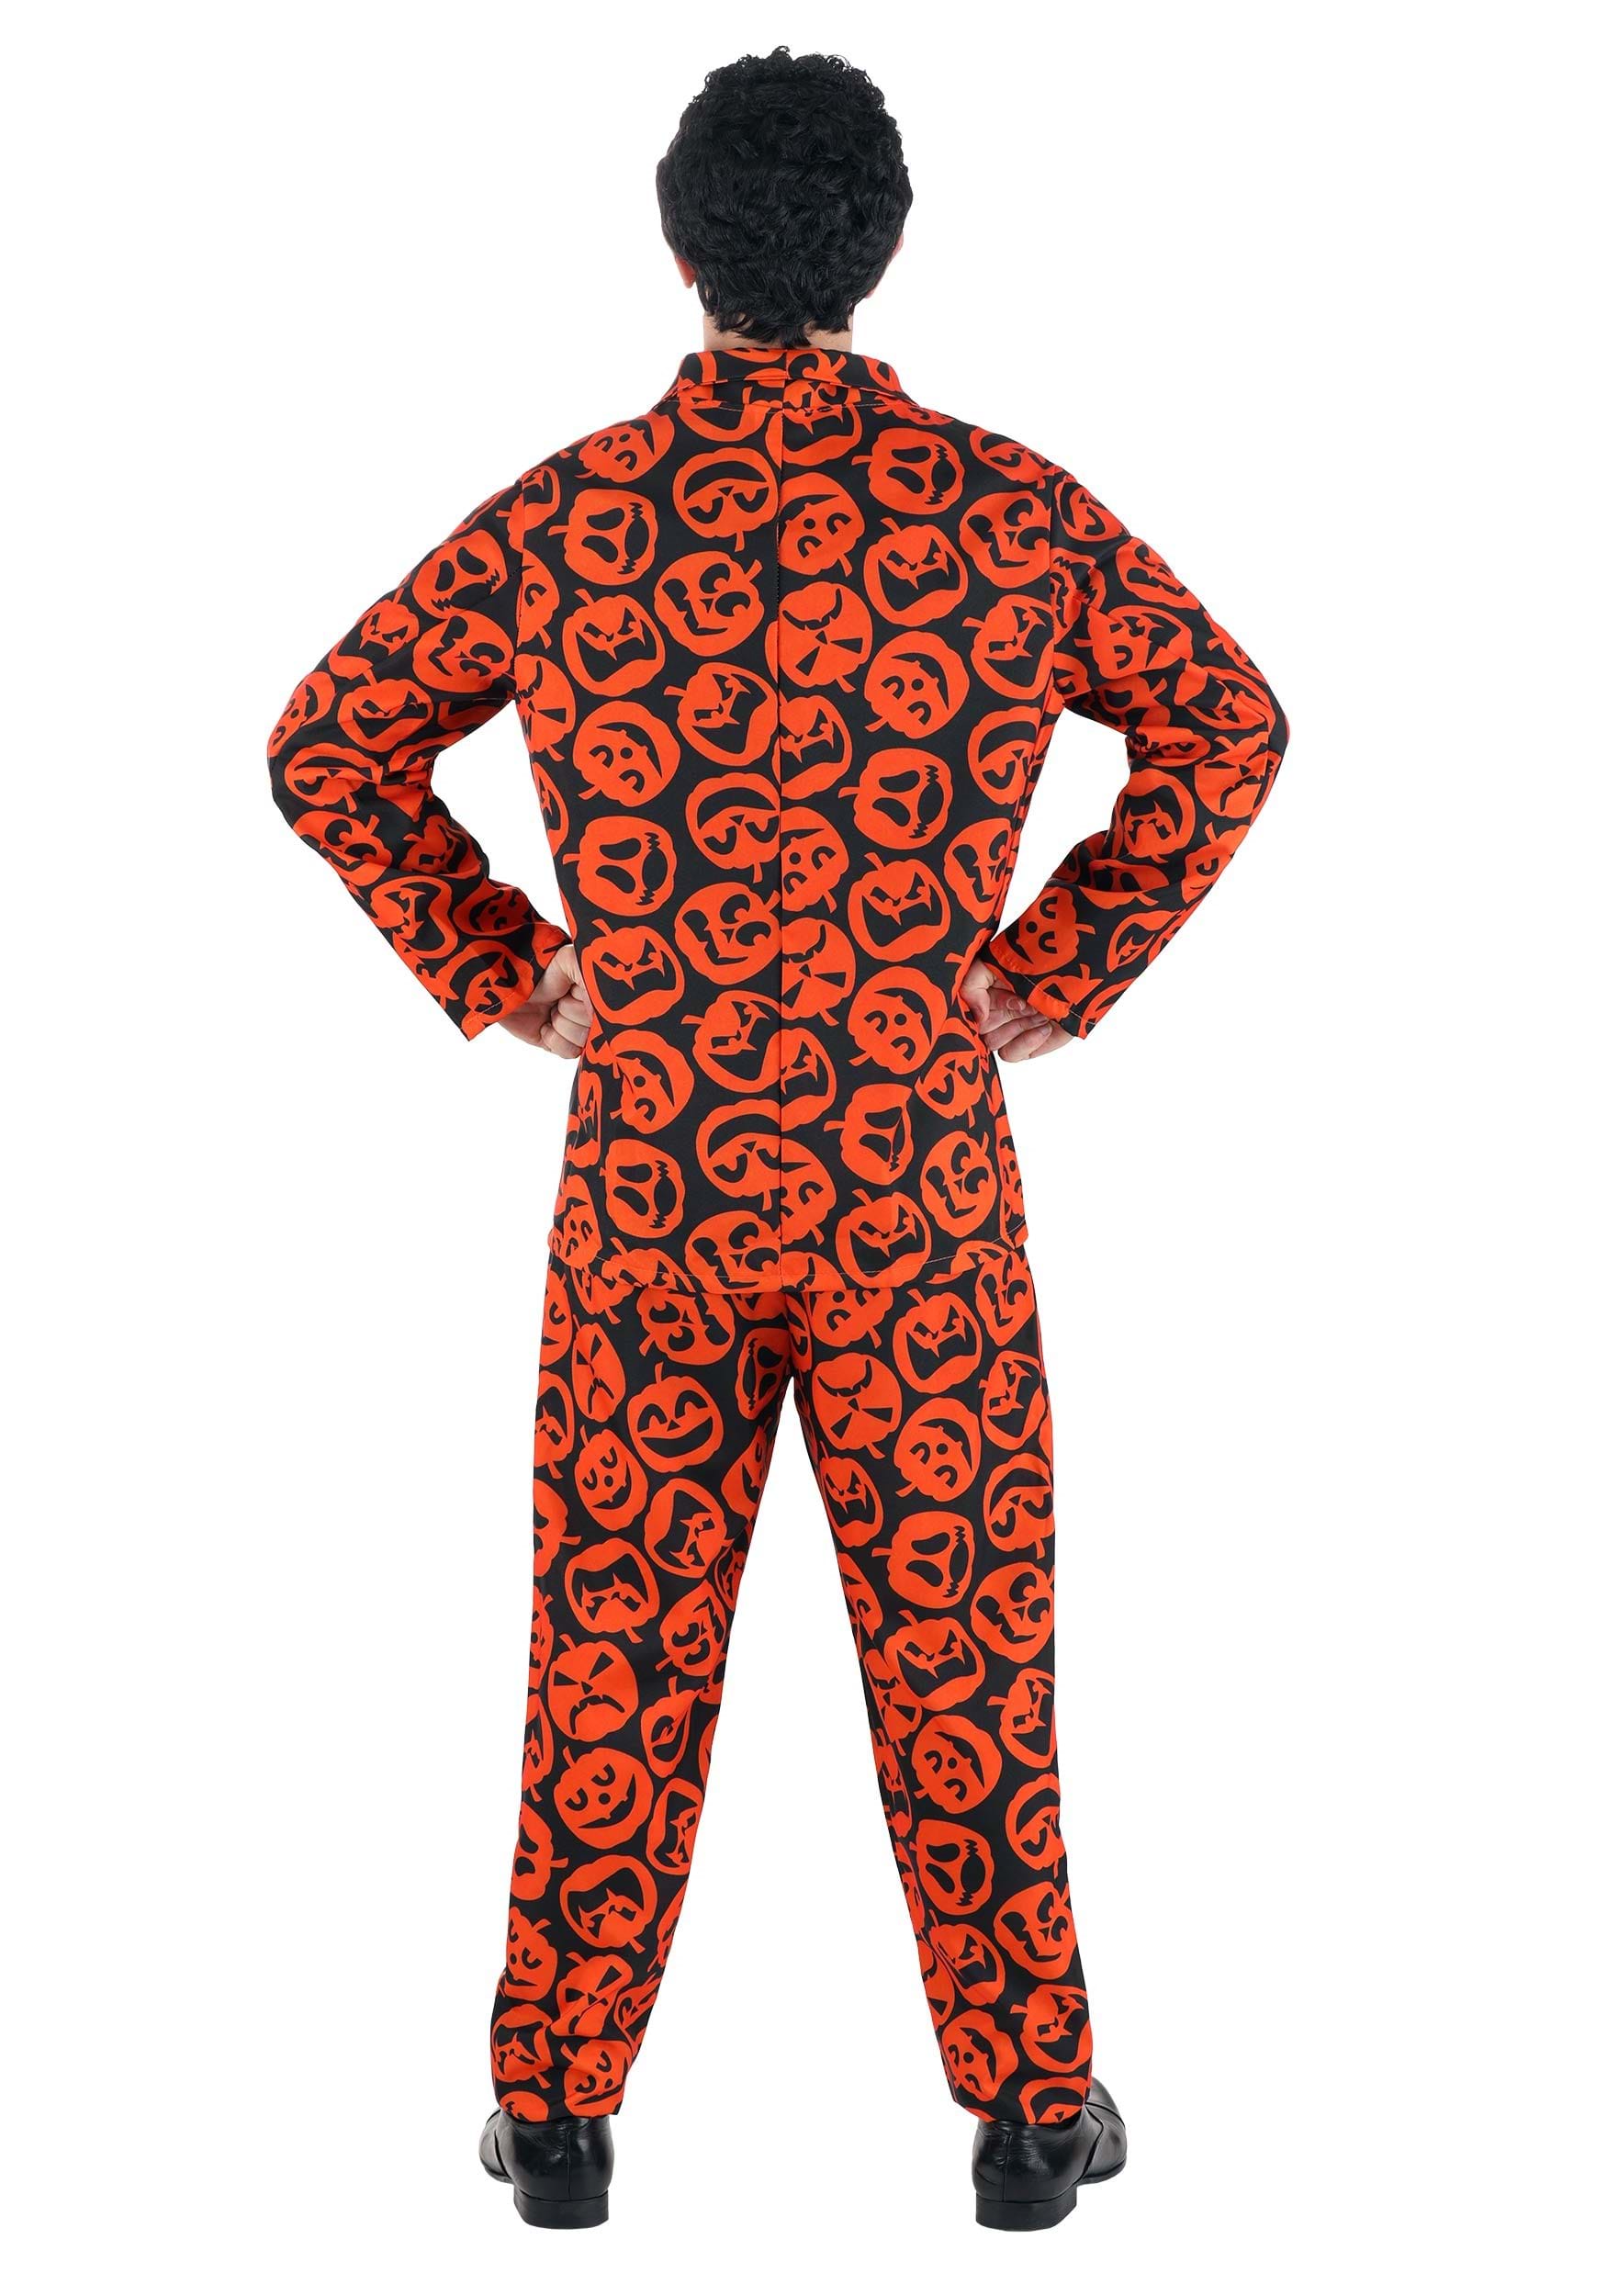 David S. Pumpkins Suit